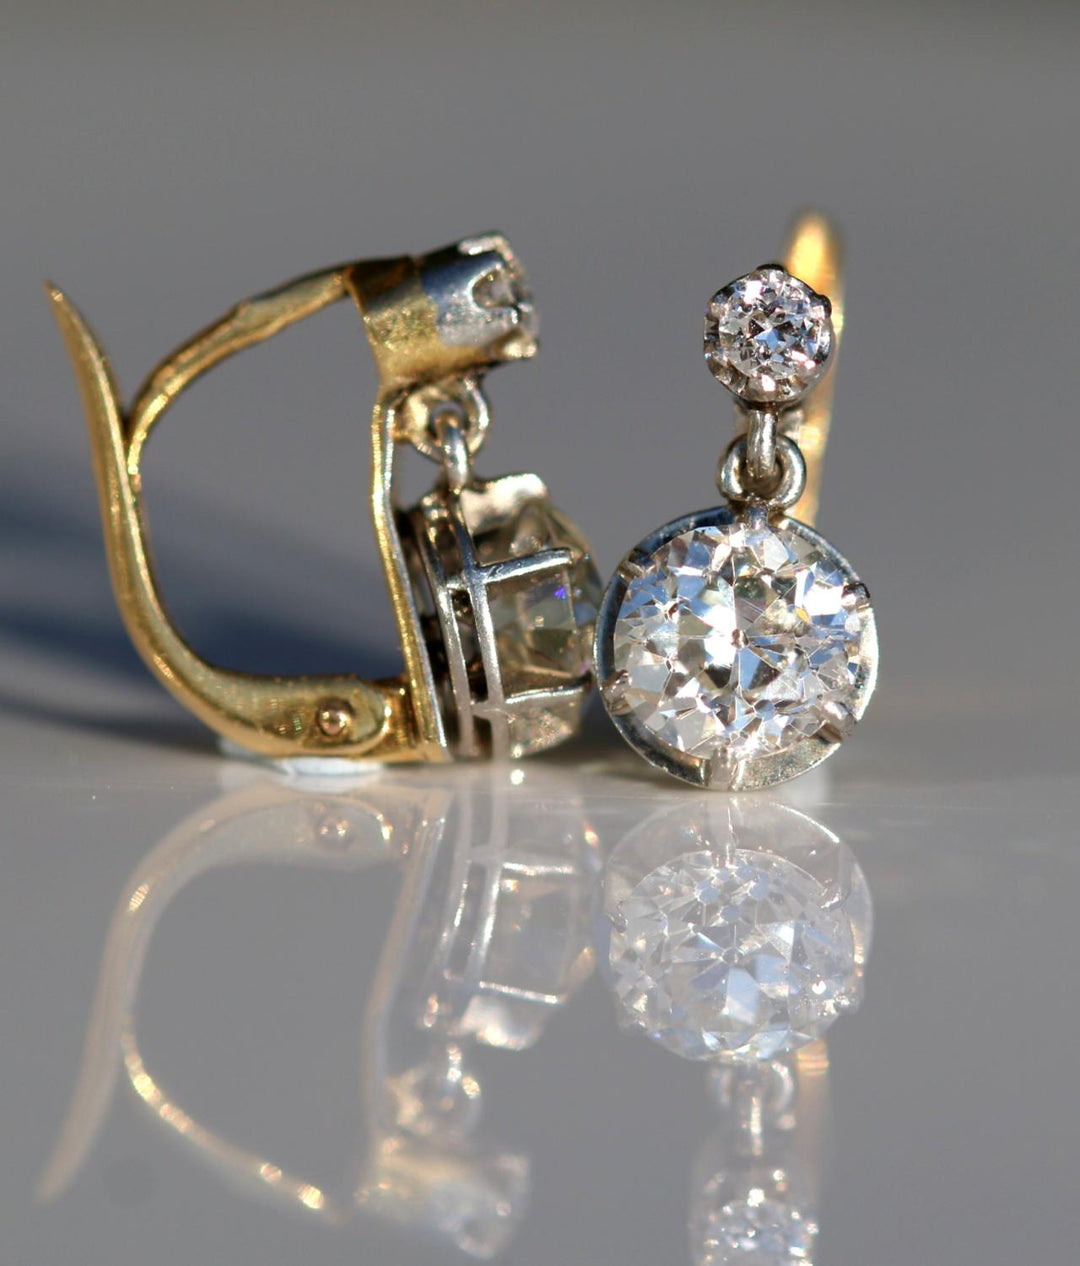 Victorian Antique Old European Cut Diamond Drop Earrings - SOLD